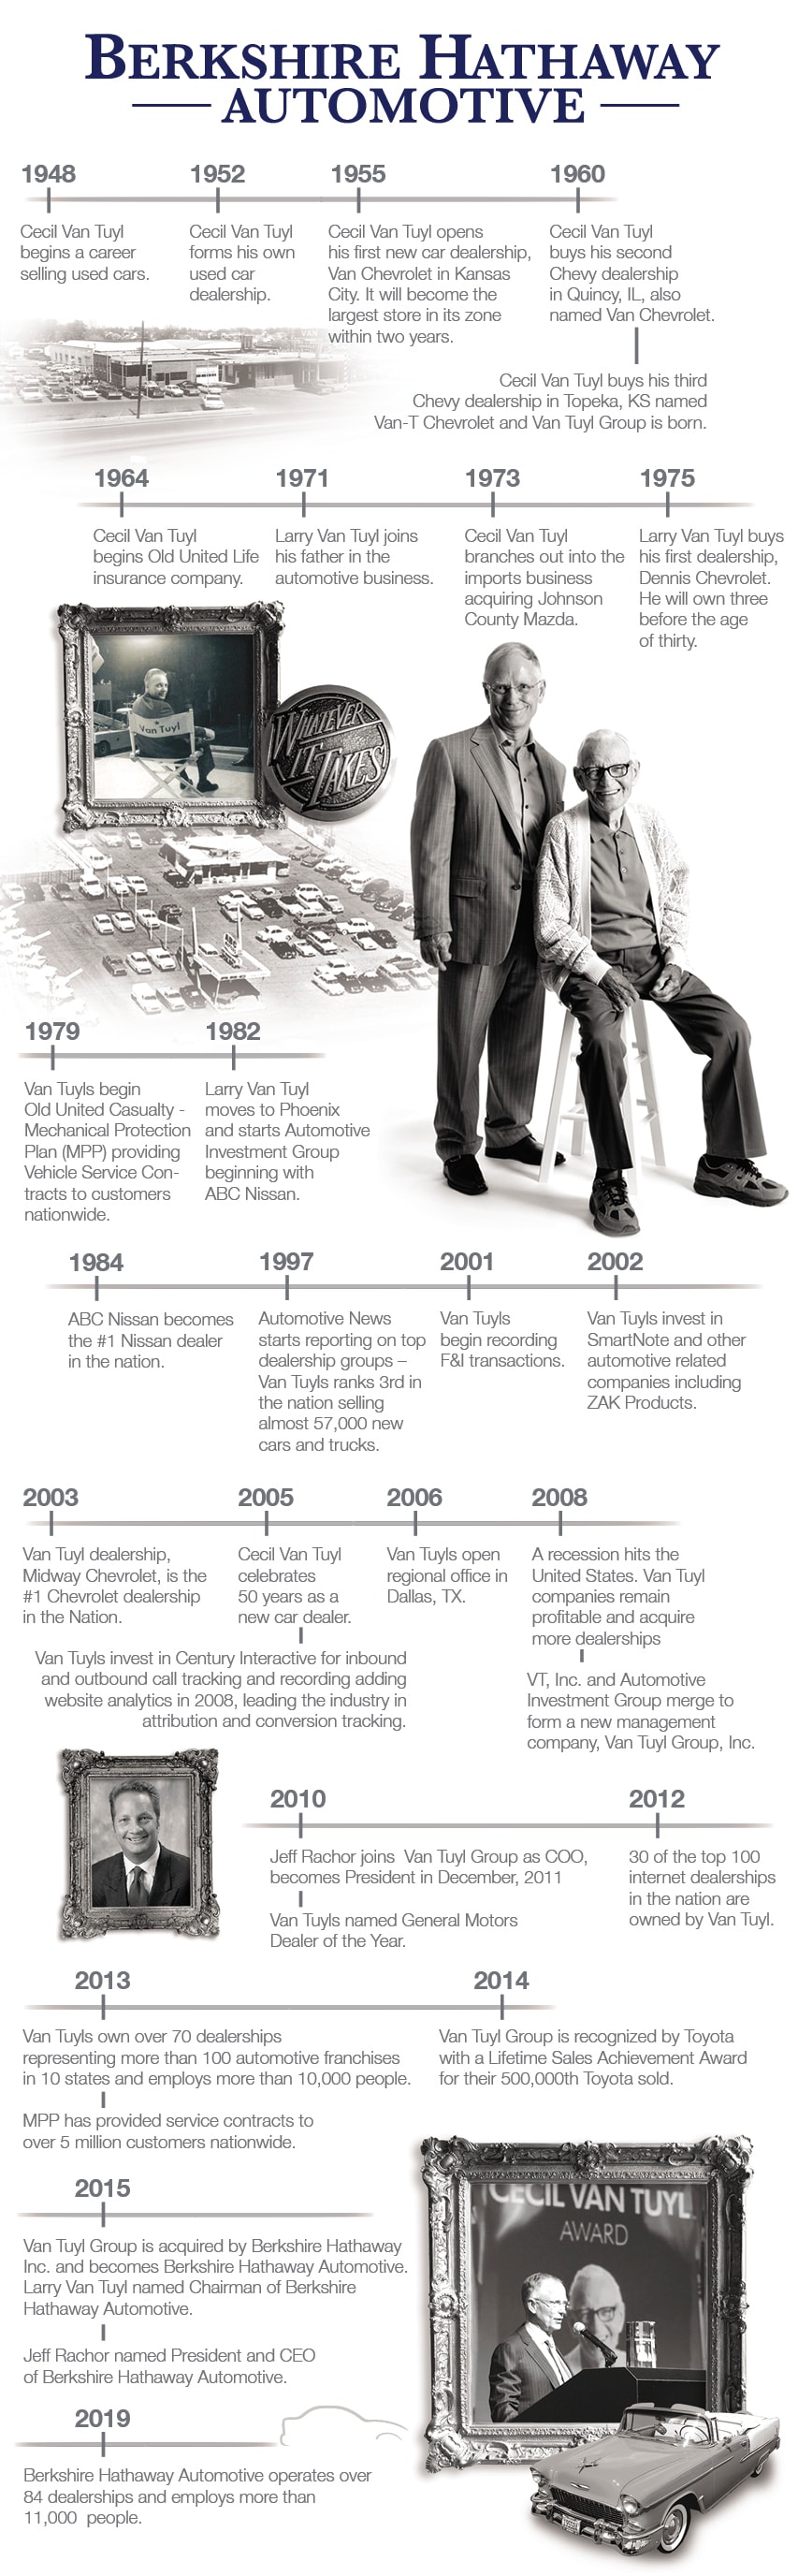 Timeline of Berkshire Hathaway Automotive